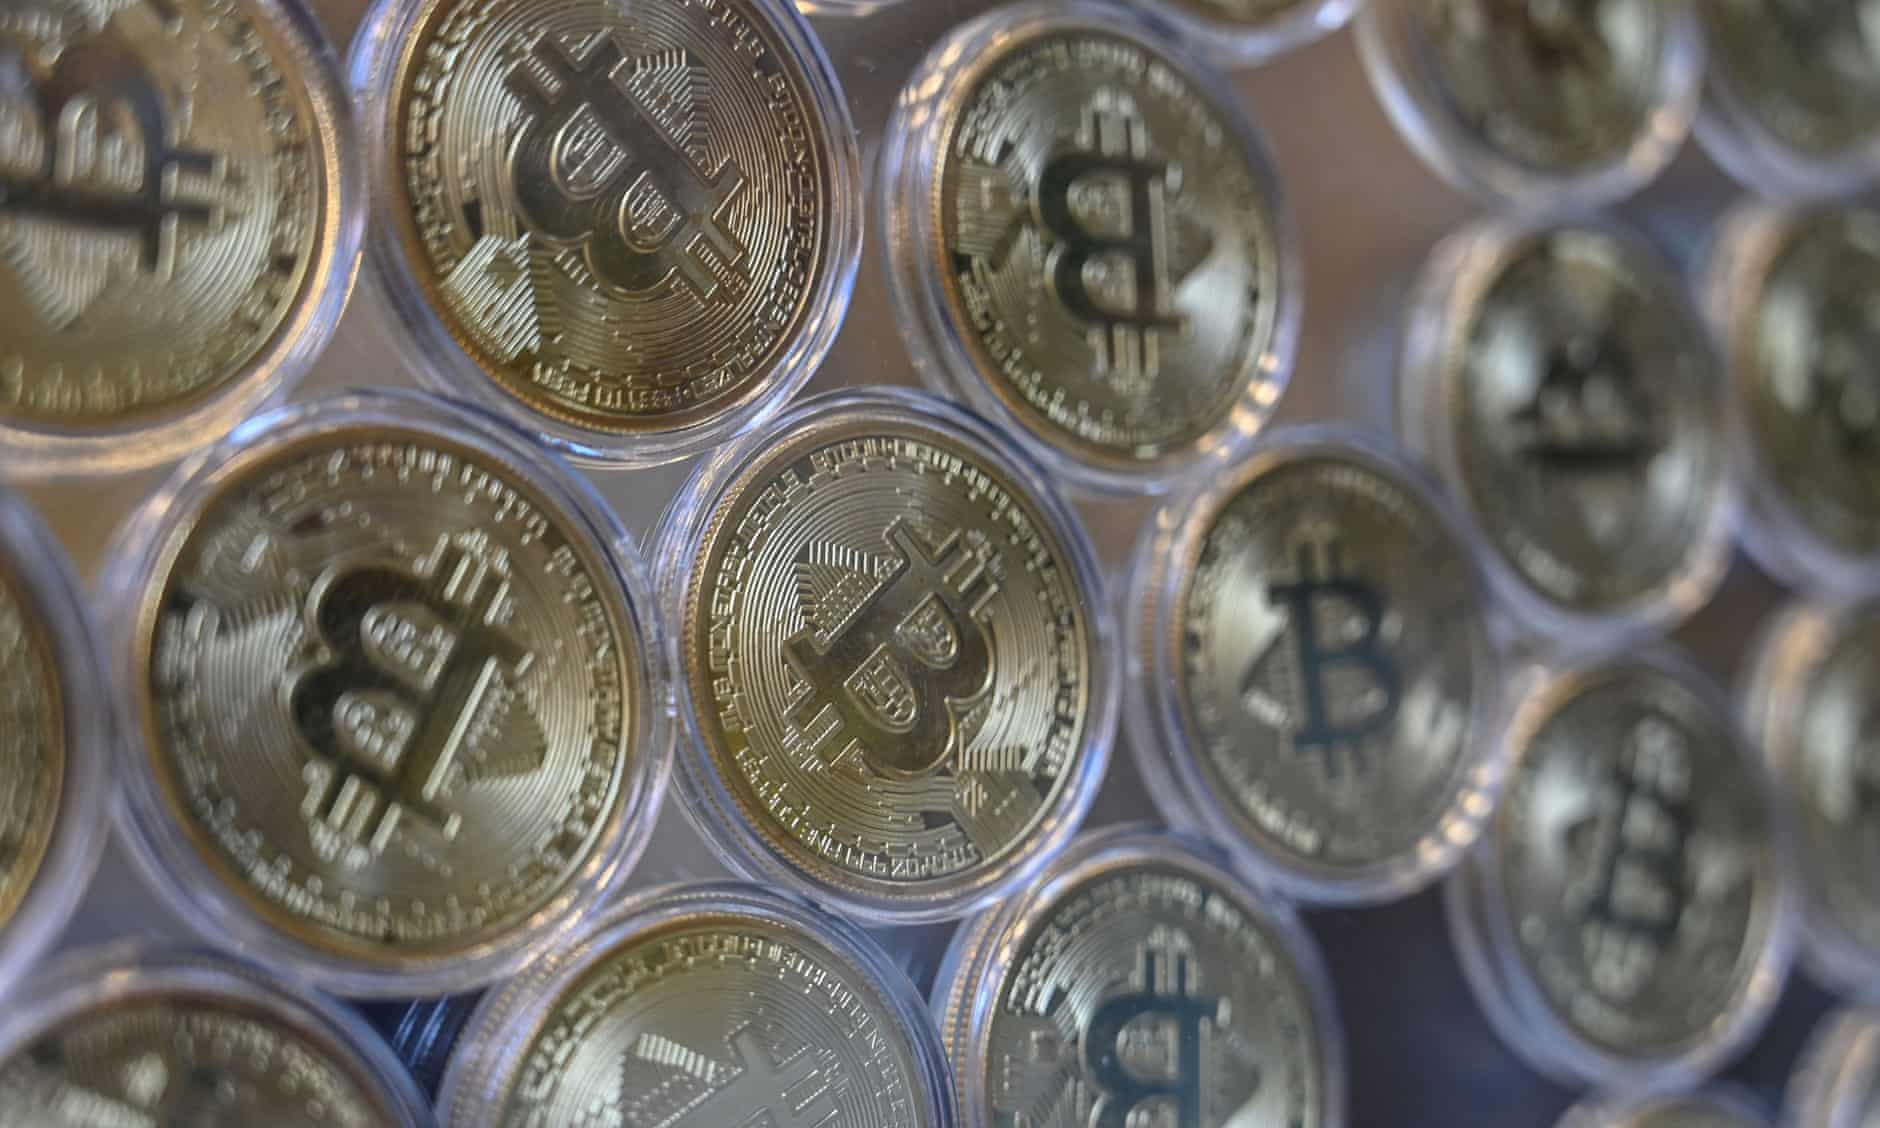 Bitcoin could trigger financial meltdown, warns Bank of England deputy